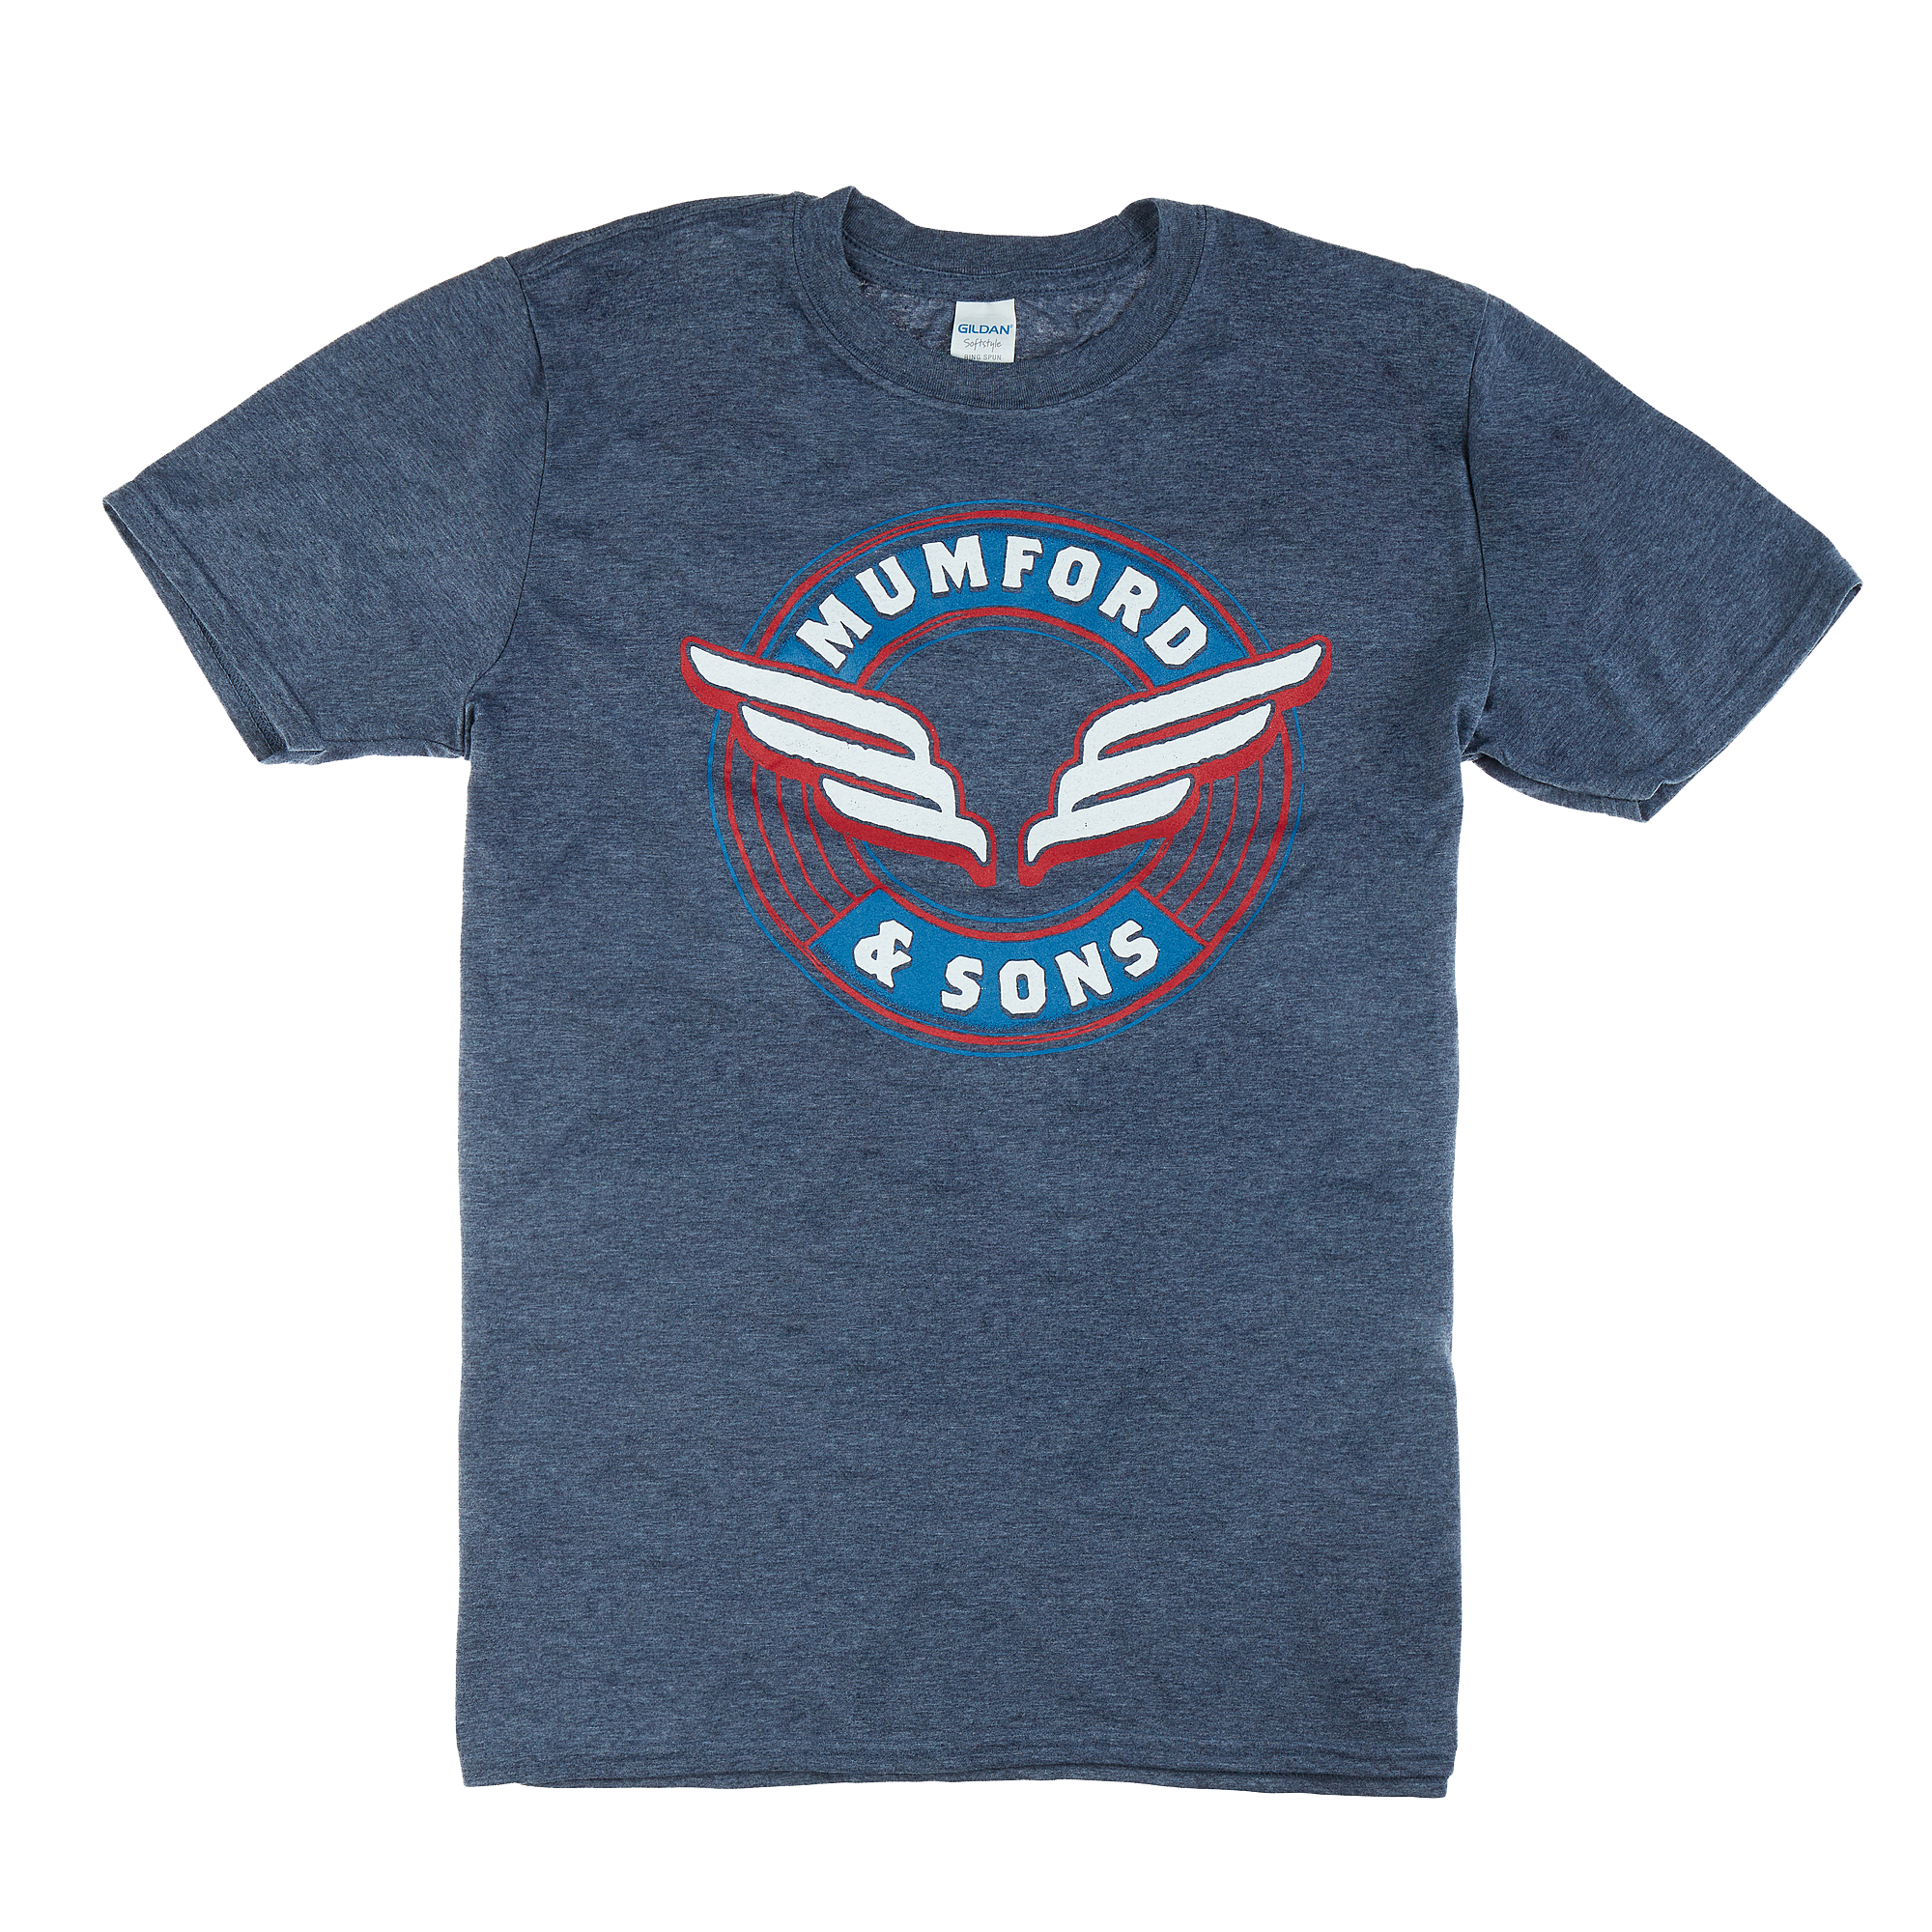 Mumford & Sons  - Blue Wing Emblem Print T-shirt